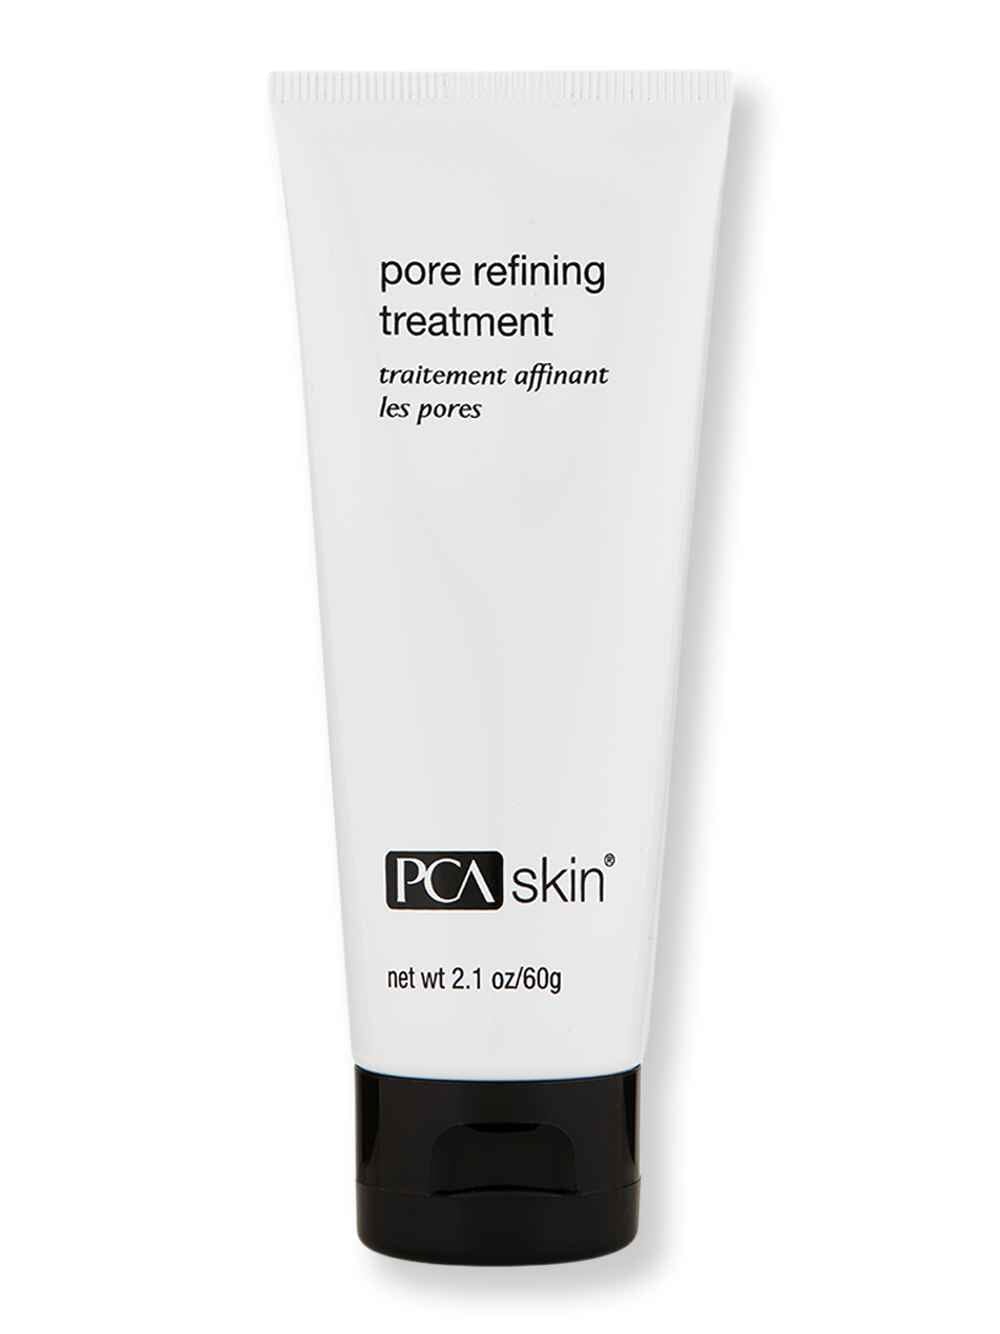 PCA Skin PCA Skin Pore Refining Treatment 2.1 oz62 ml Skin Care Treatments 